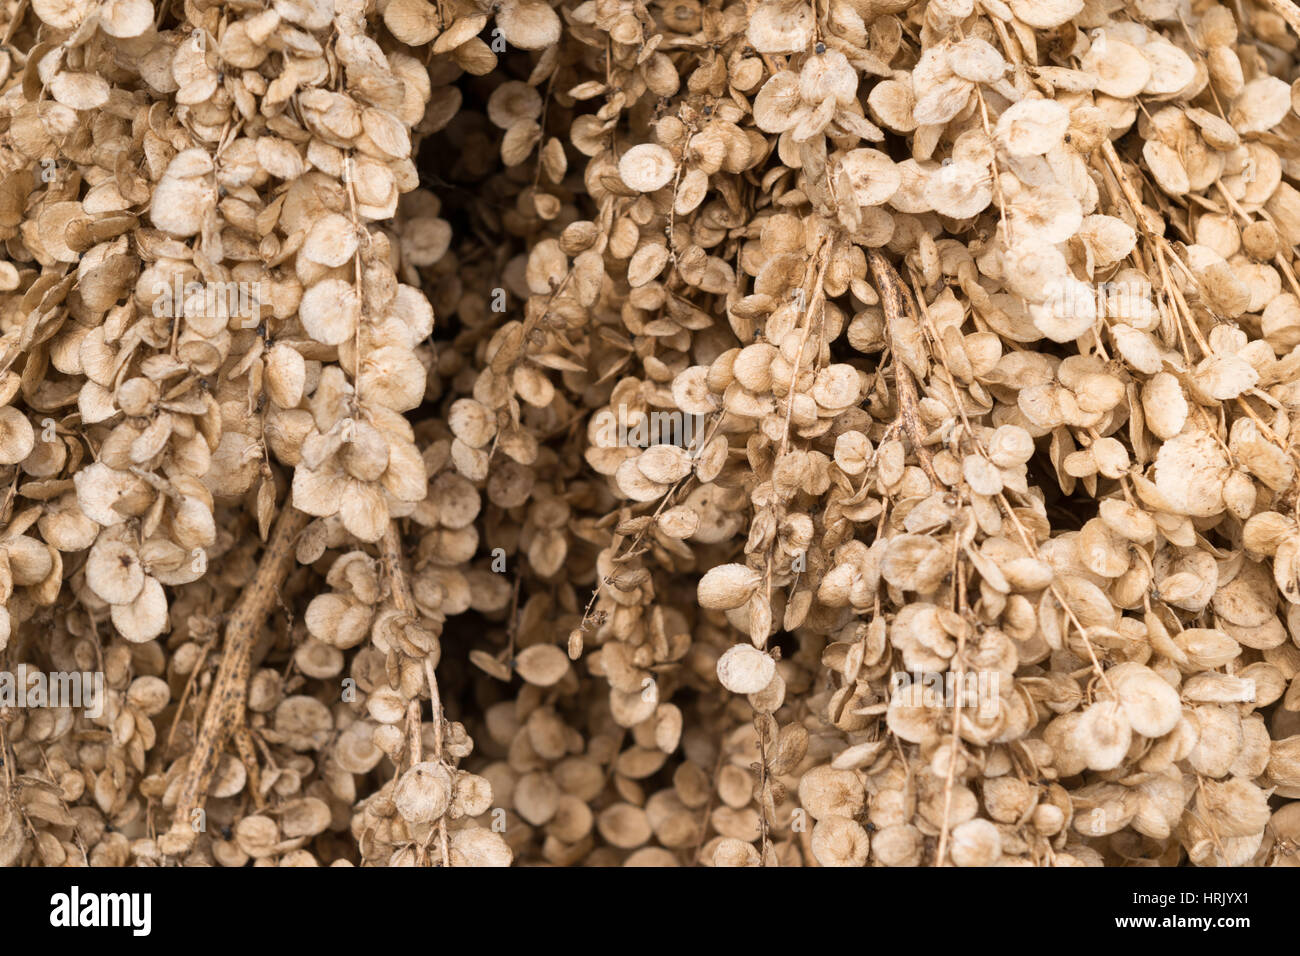 Atriplex hortensis. Hanging garden orache seeds - abstract background Stock Photo